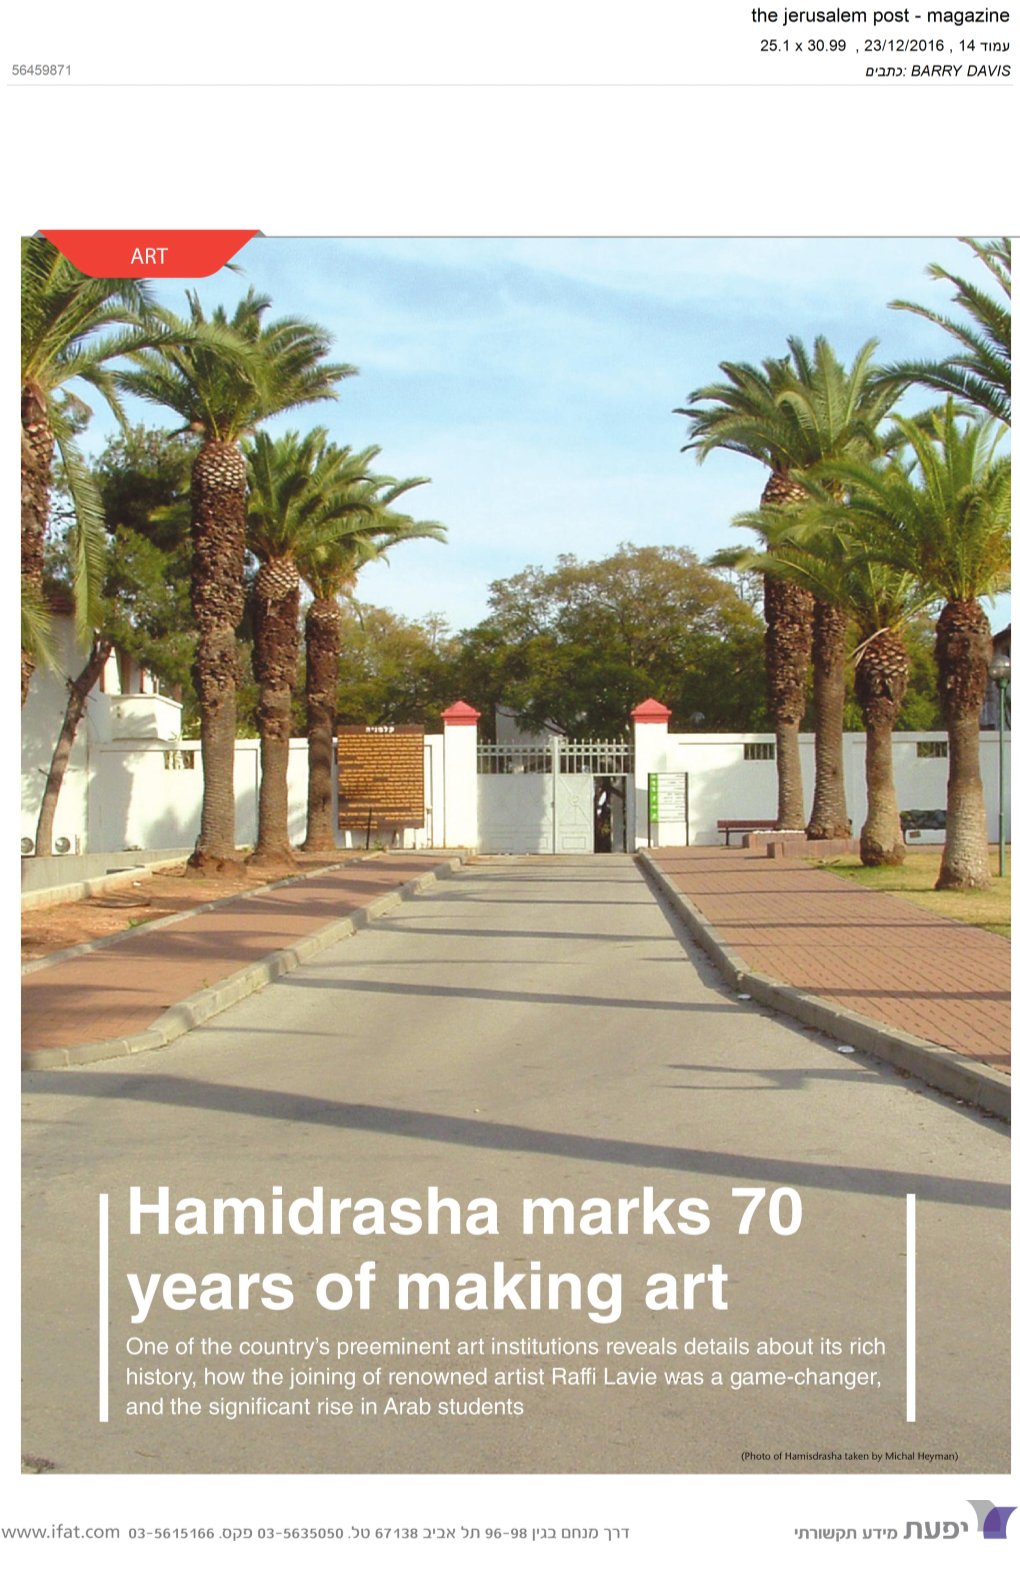 Hamidrasha Marks 70 Years of Making Art